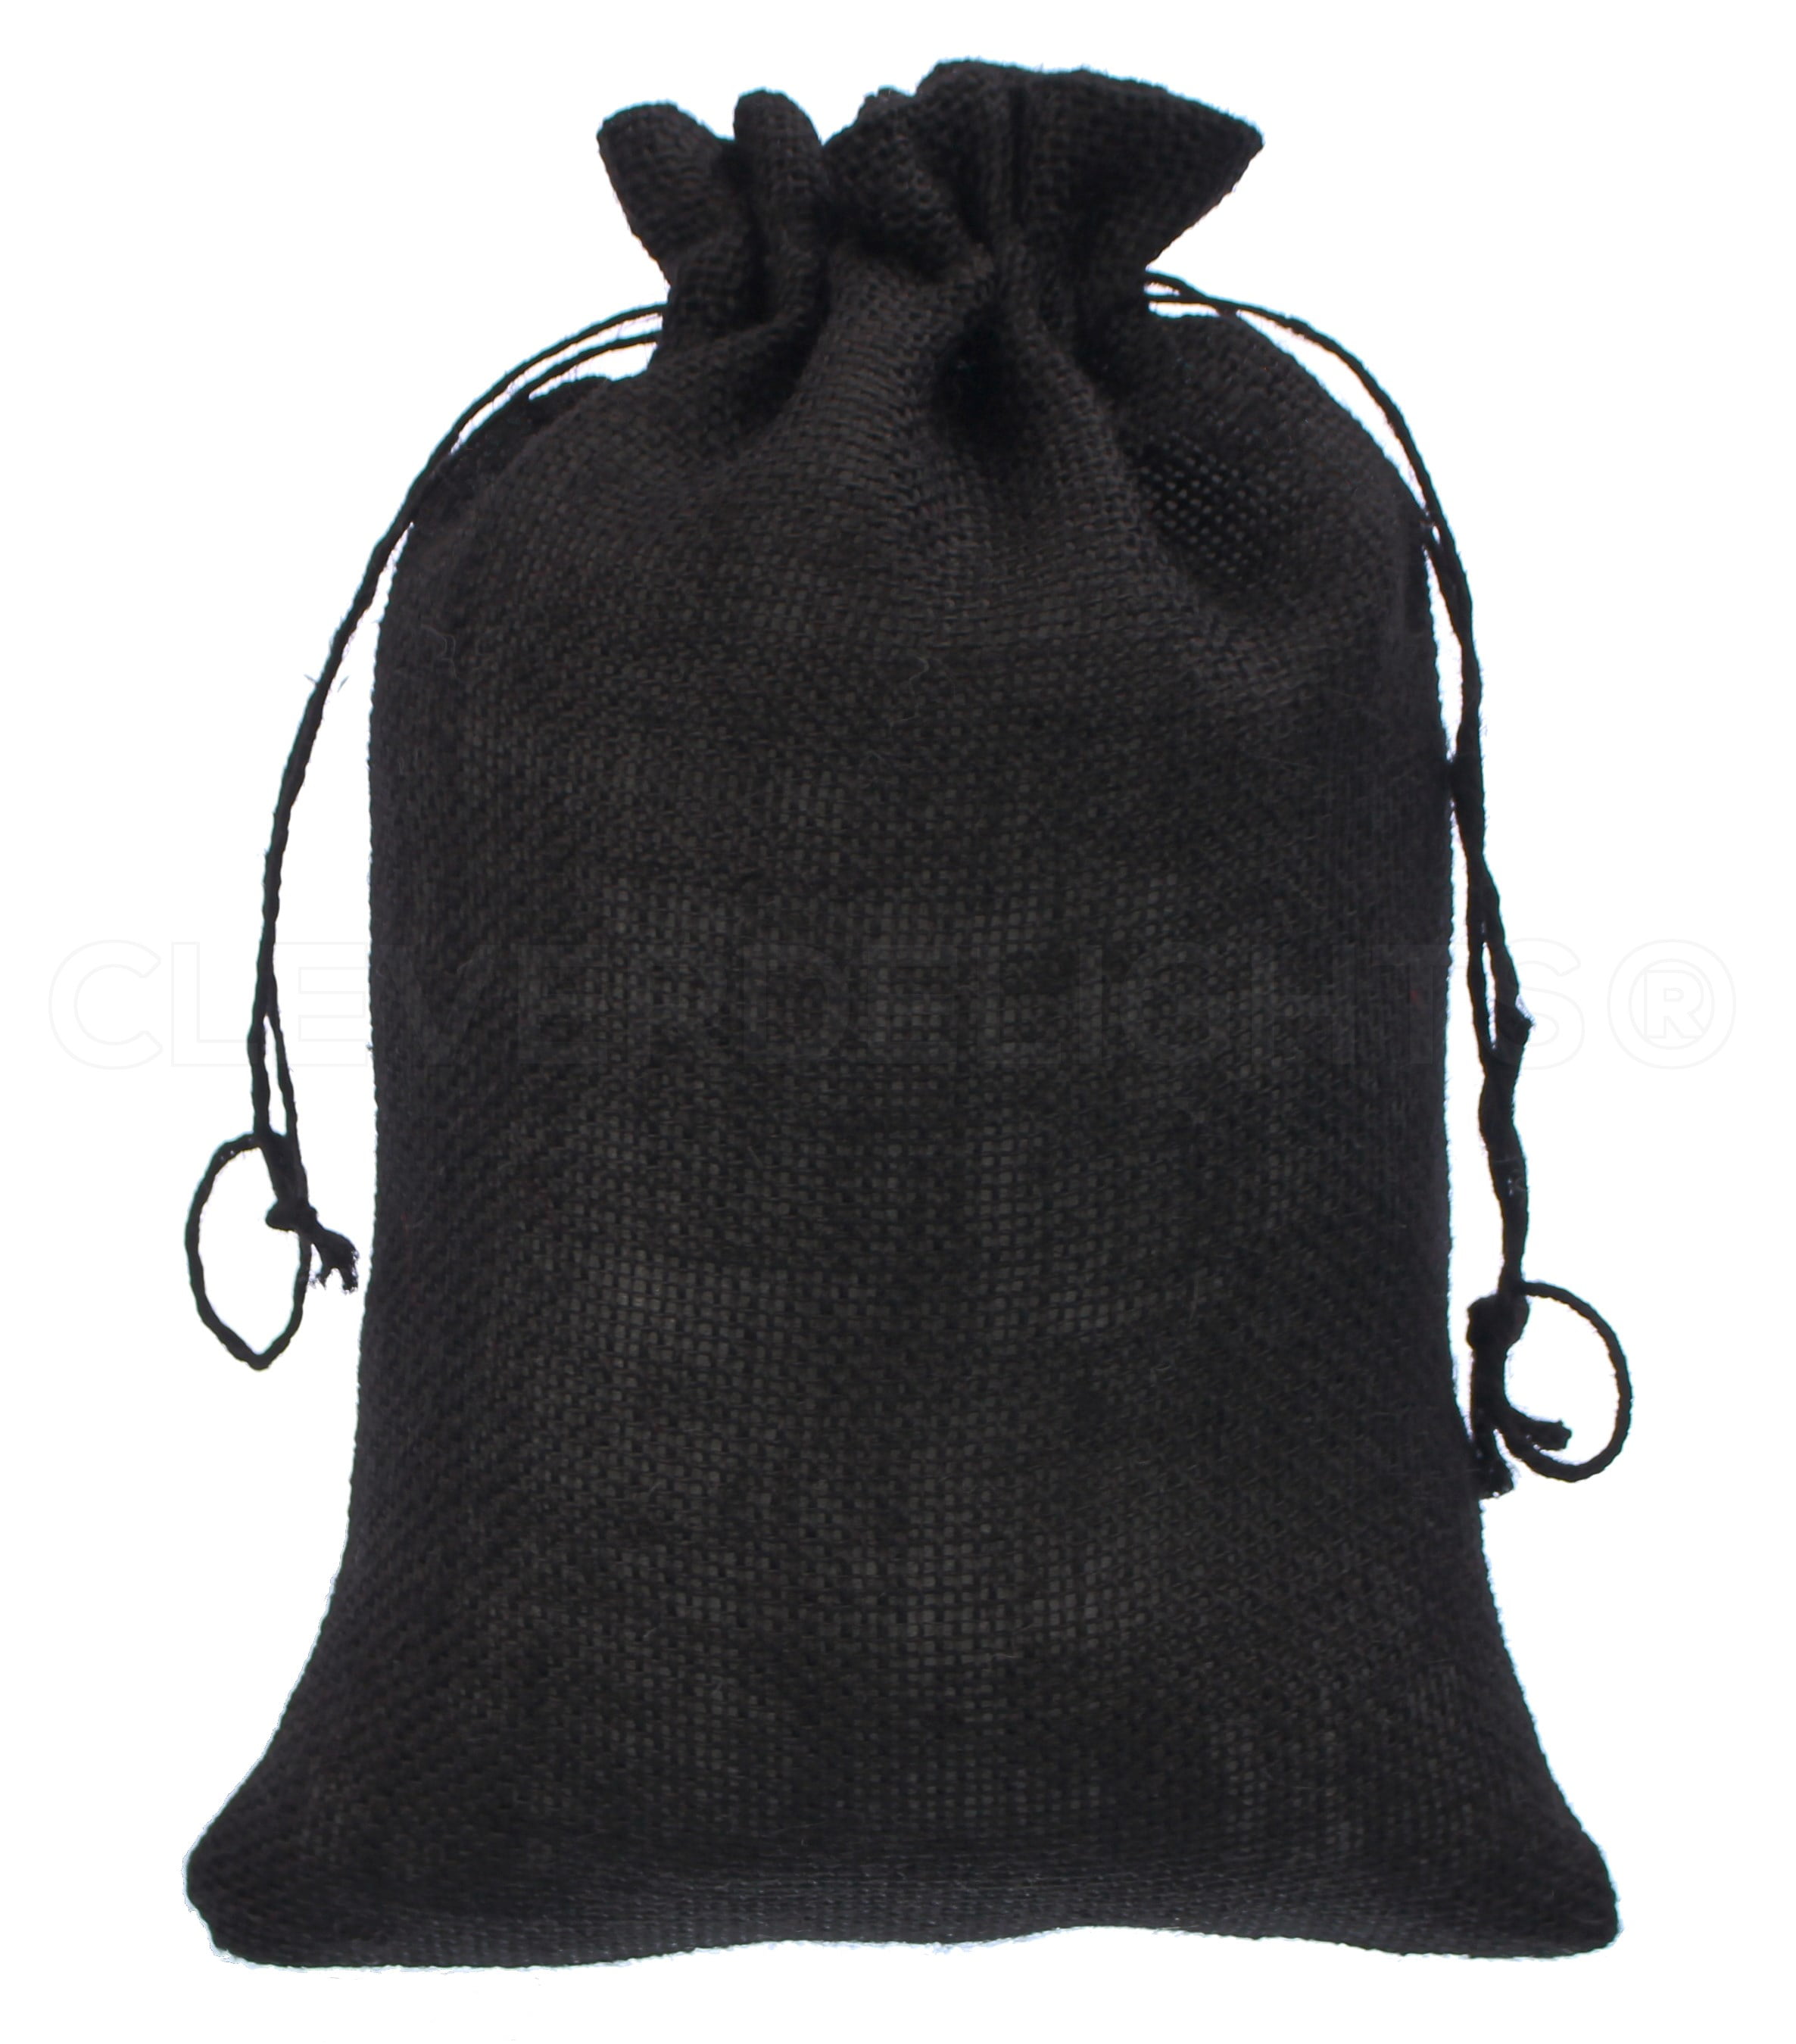 Natural Burlap Bag Drawstring in BLACK STARS Design 12" x 8" Crafts Sack w 